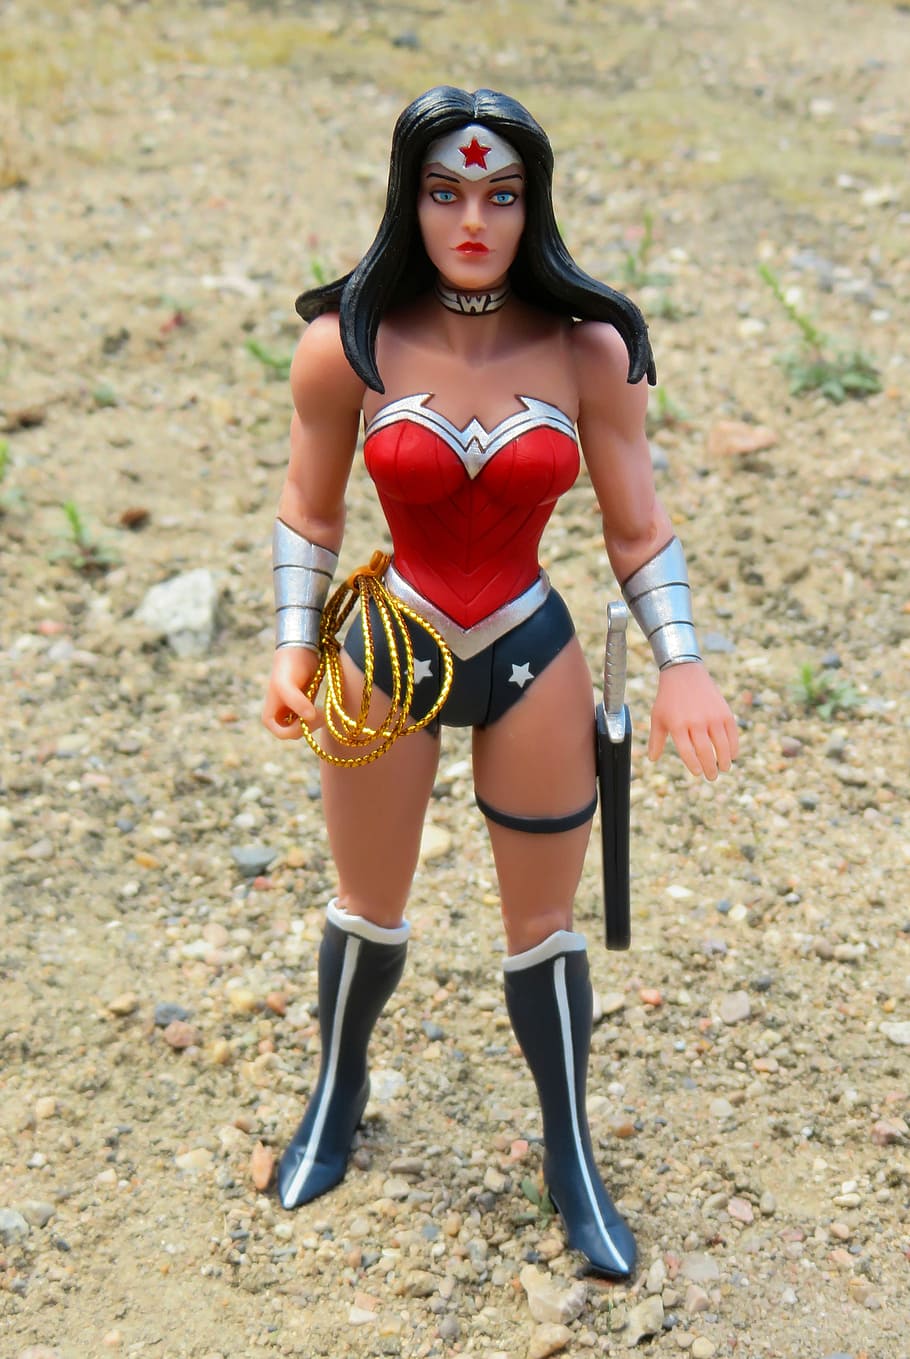 wonder woman action figure, daytime, Wonder Woman, Superhero, Costume, Female, feminism, strong, strength, power